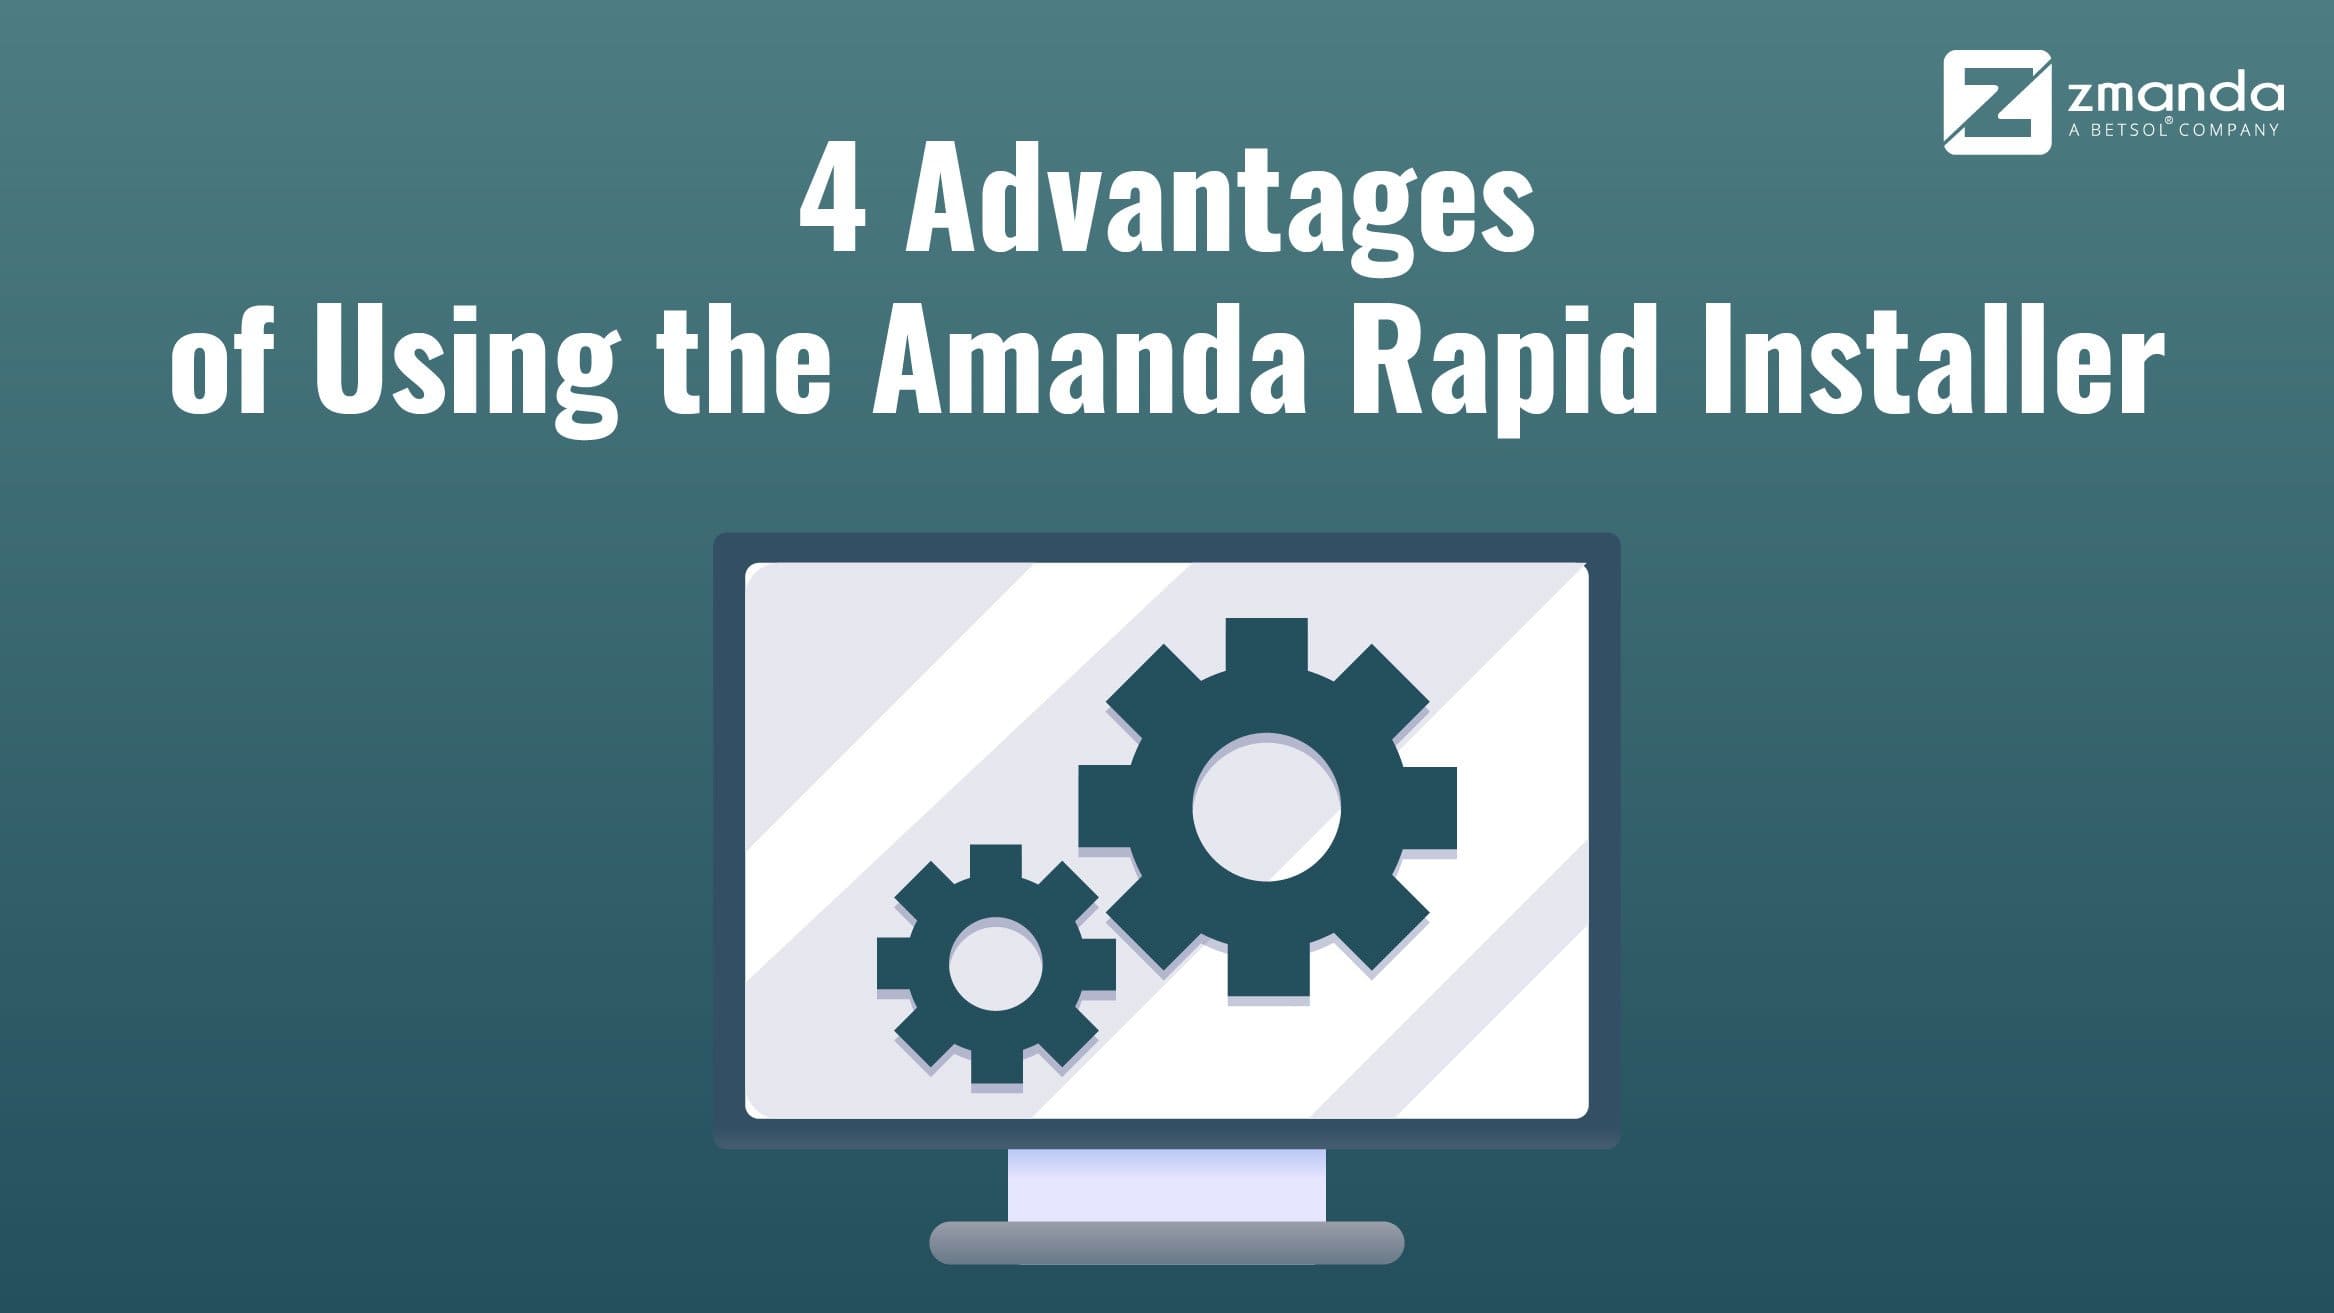 Advantages of using the Amanda Rapid Installer